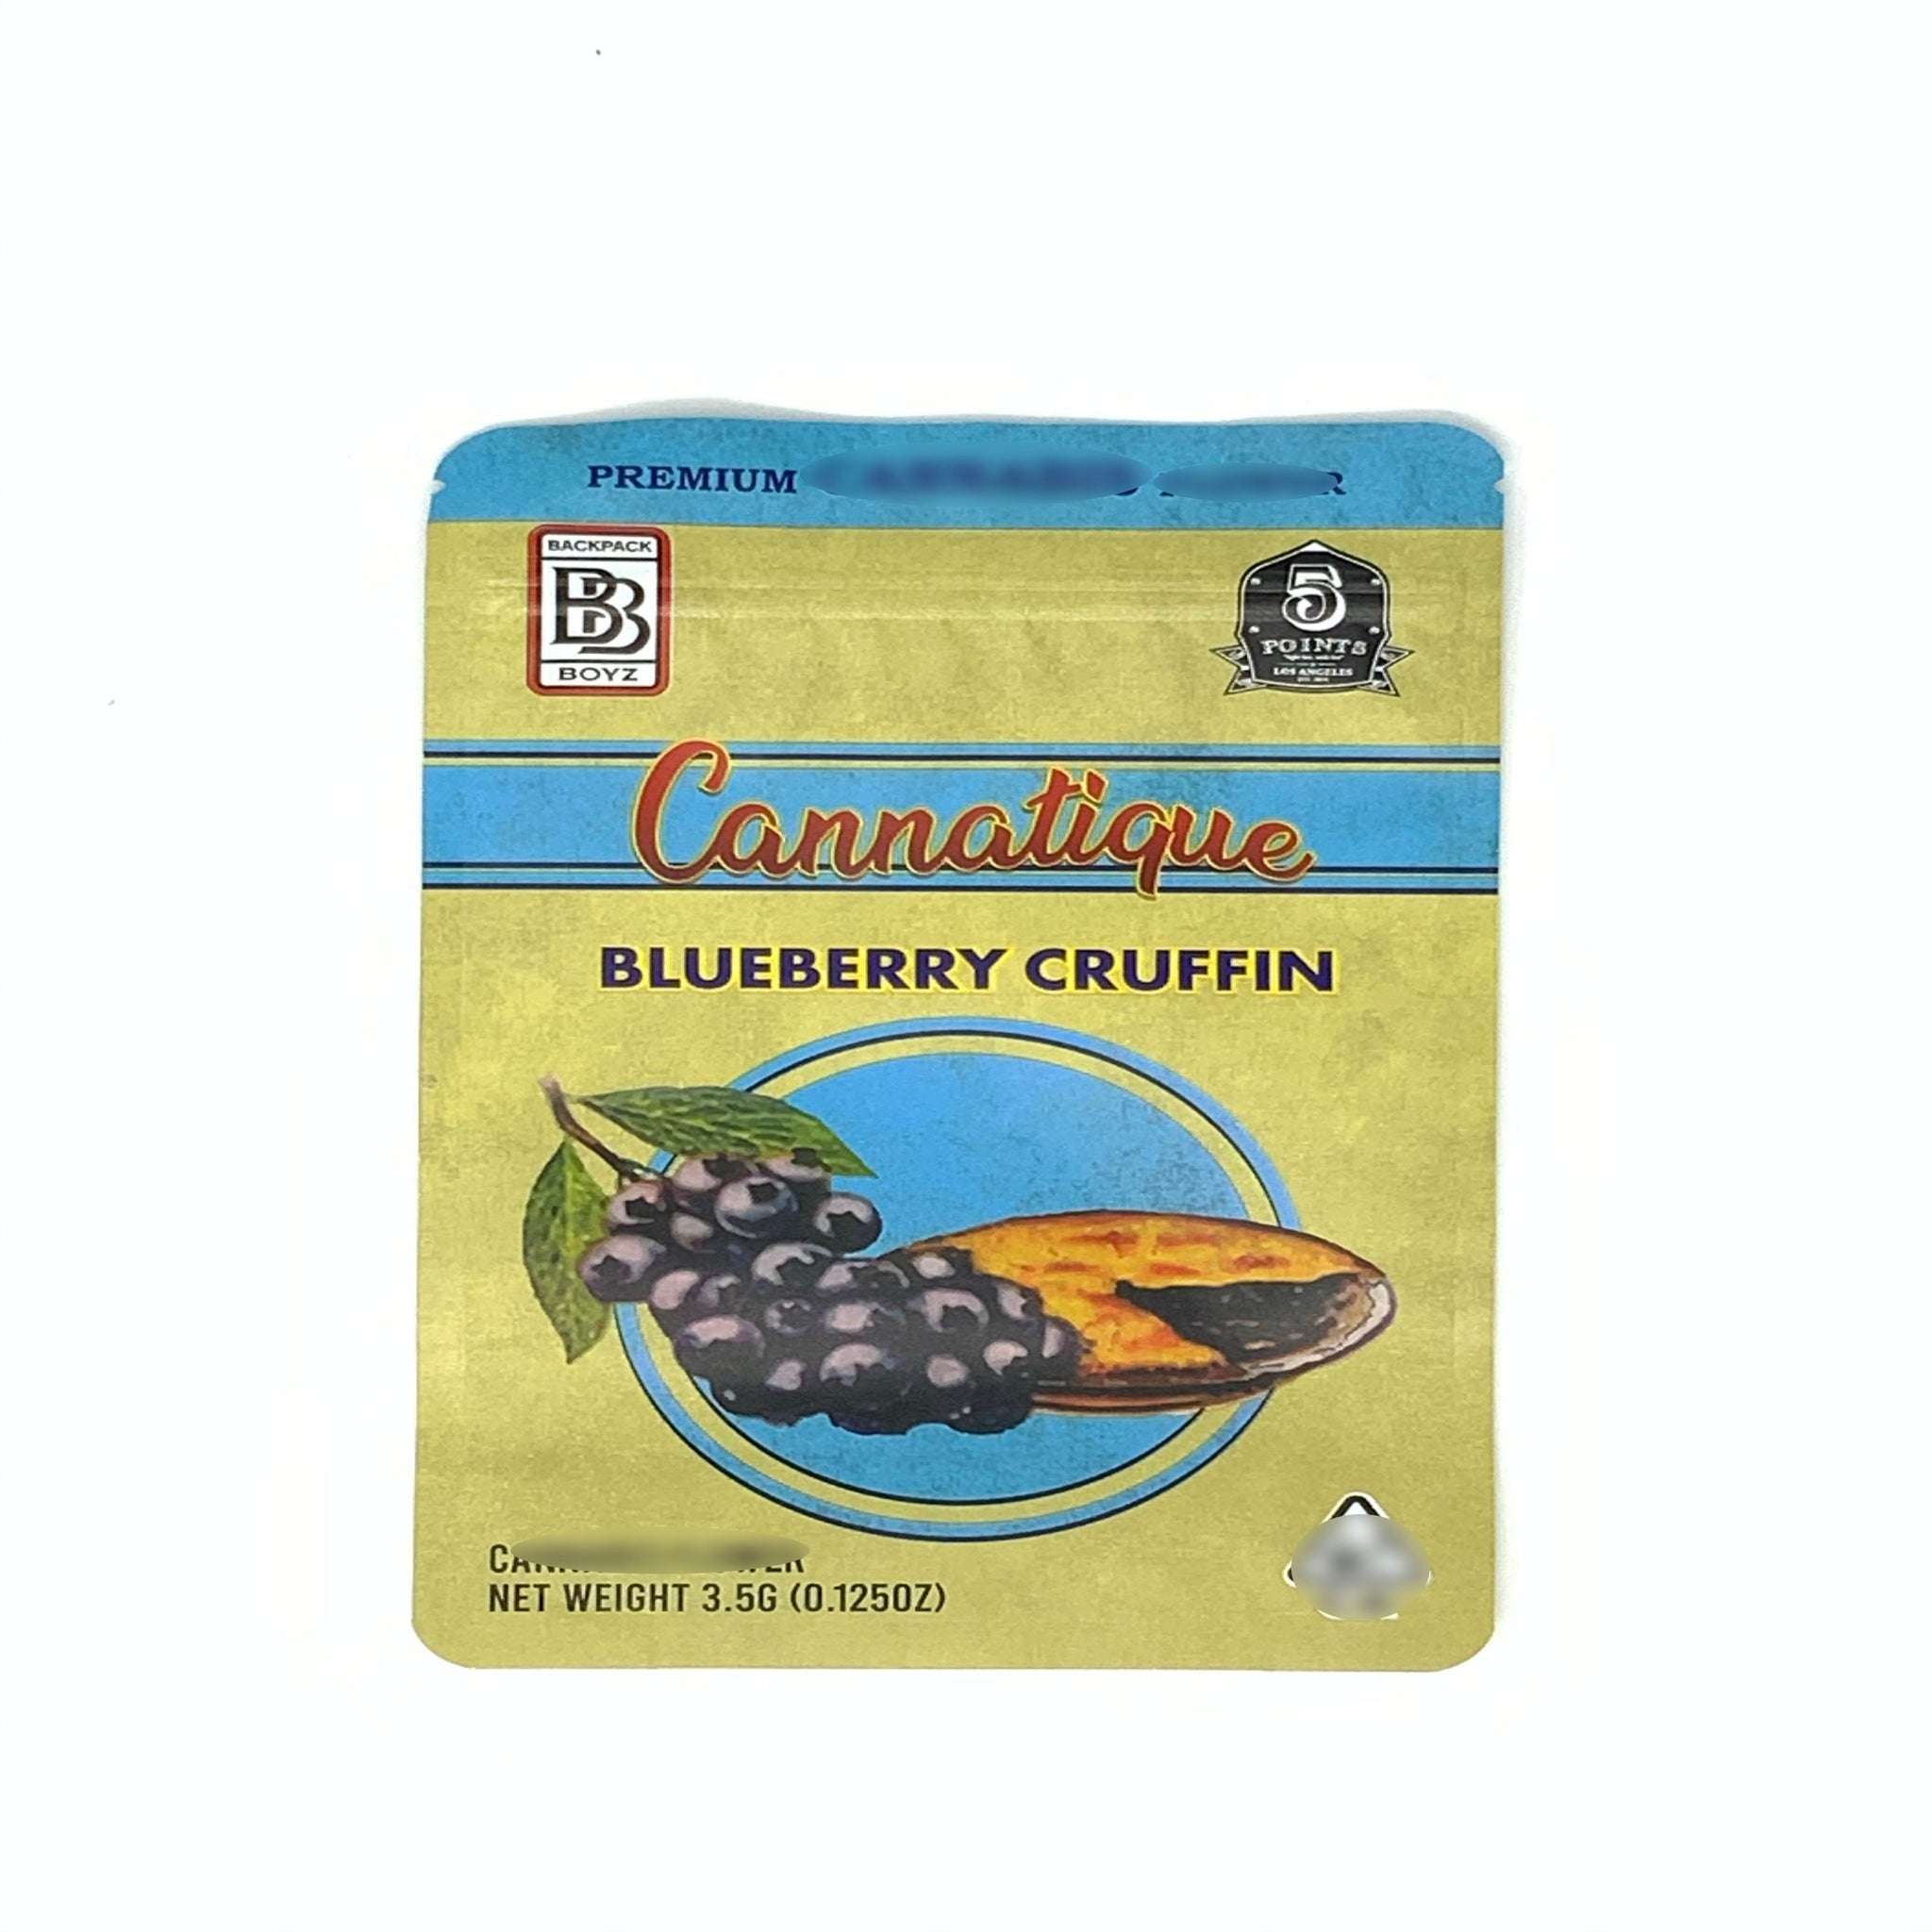 Canatique Blueberry Cruffin BackPack Boyz 3.5G Mylar Bags 